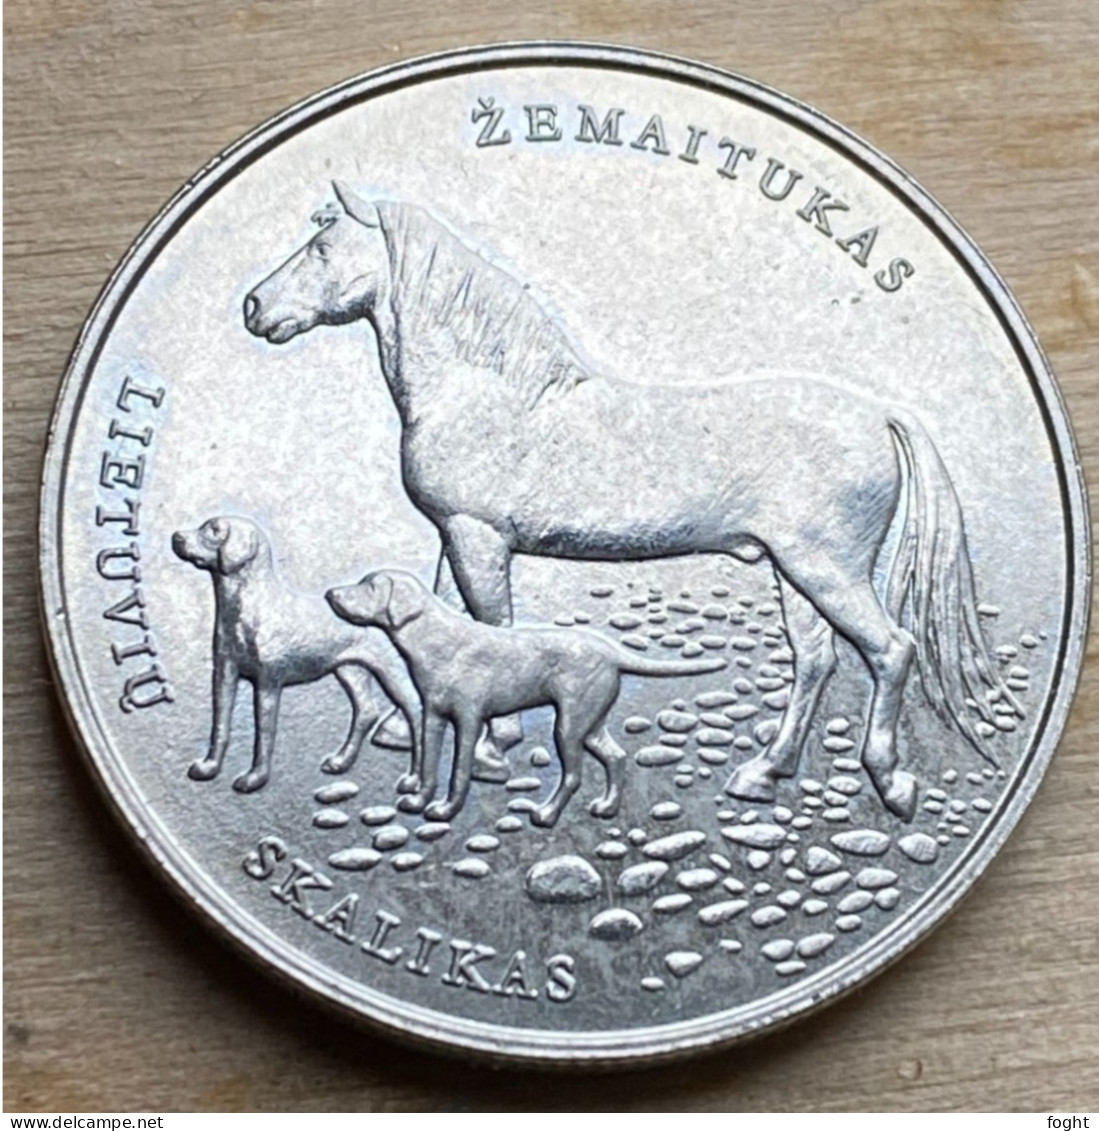 2017 LMK Lithuania "Lithuanian Hounds And Horse" 1.5 Euro Coin,KM#225,7121 - Lituania